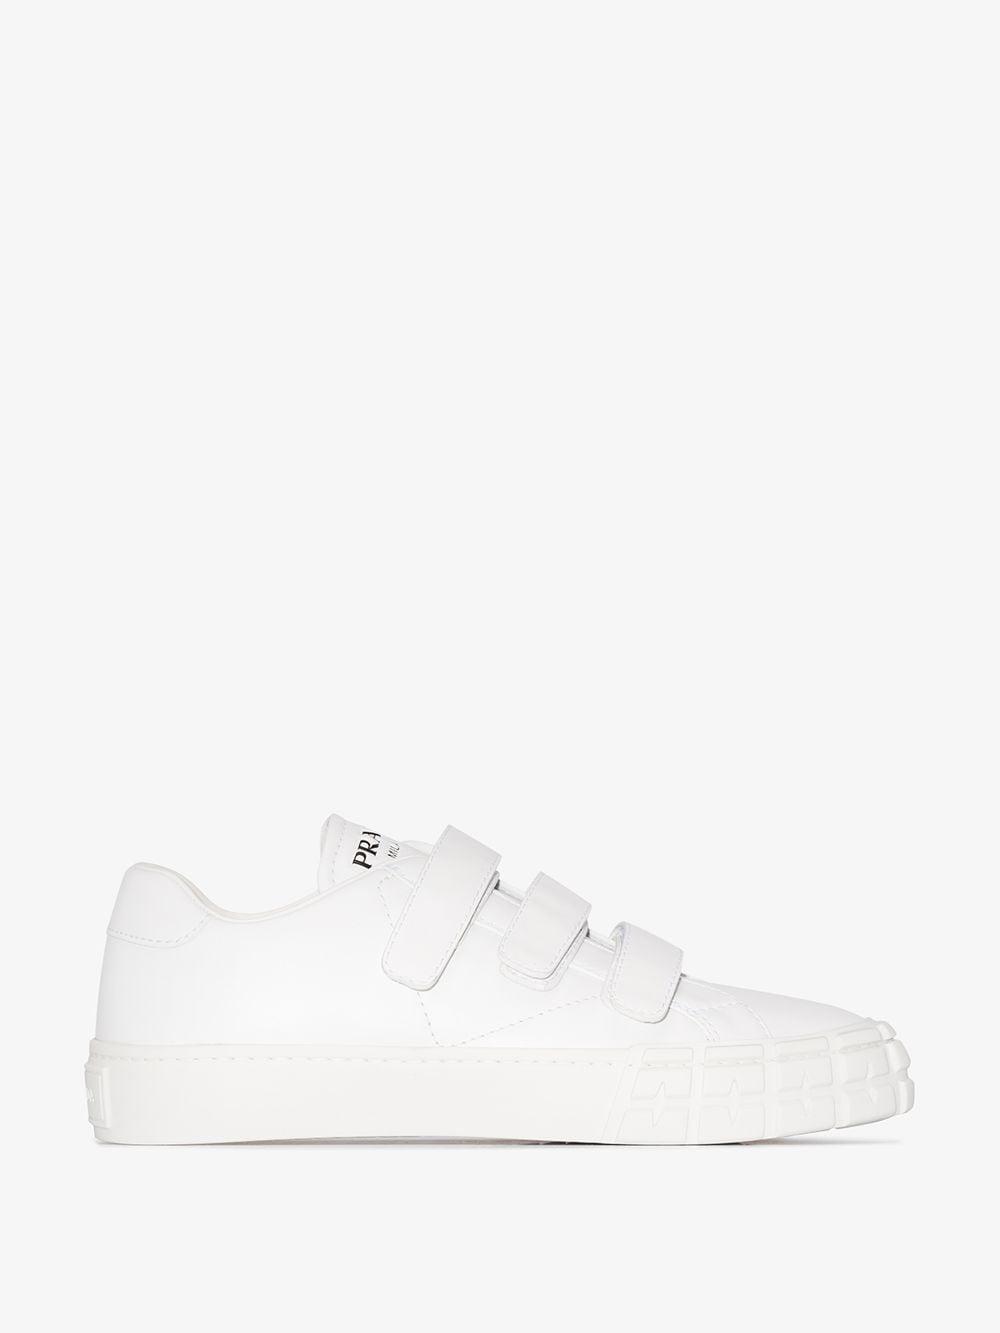 Prada Wheel Velcro Sneakers in White | Lyst